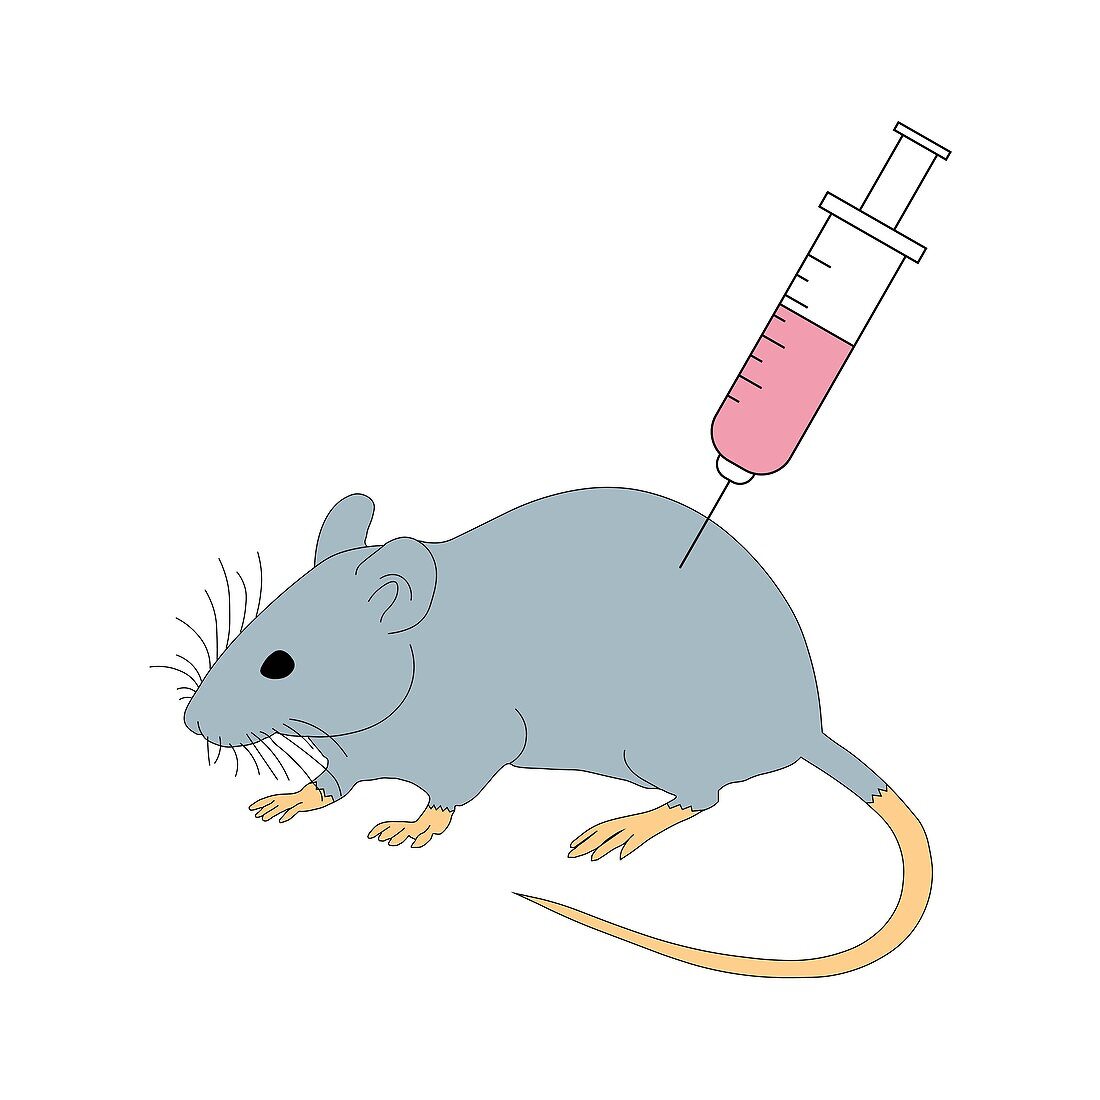 Laboratory mouse, illustration